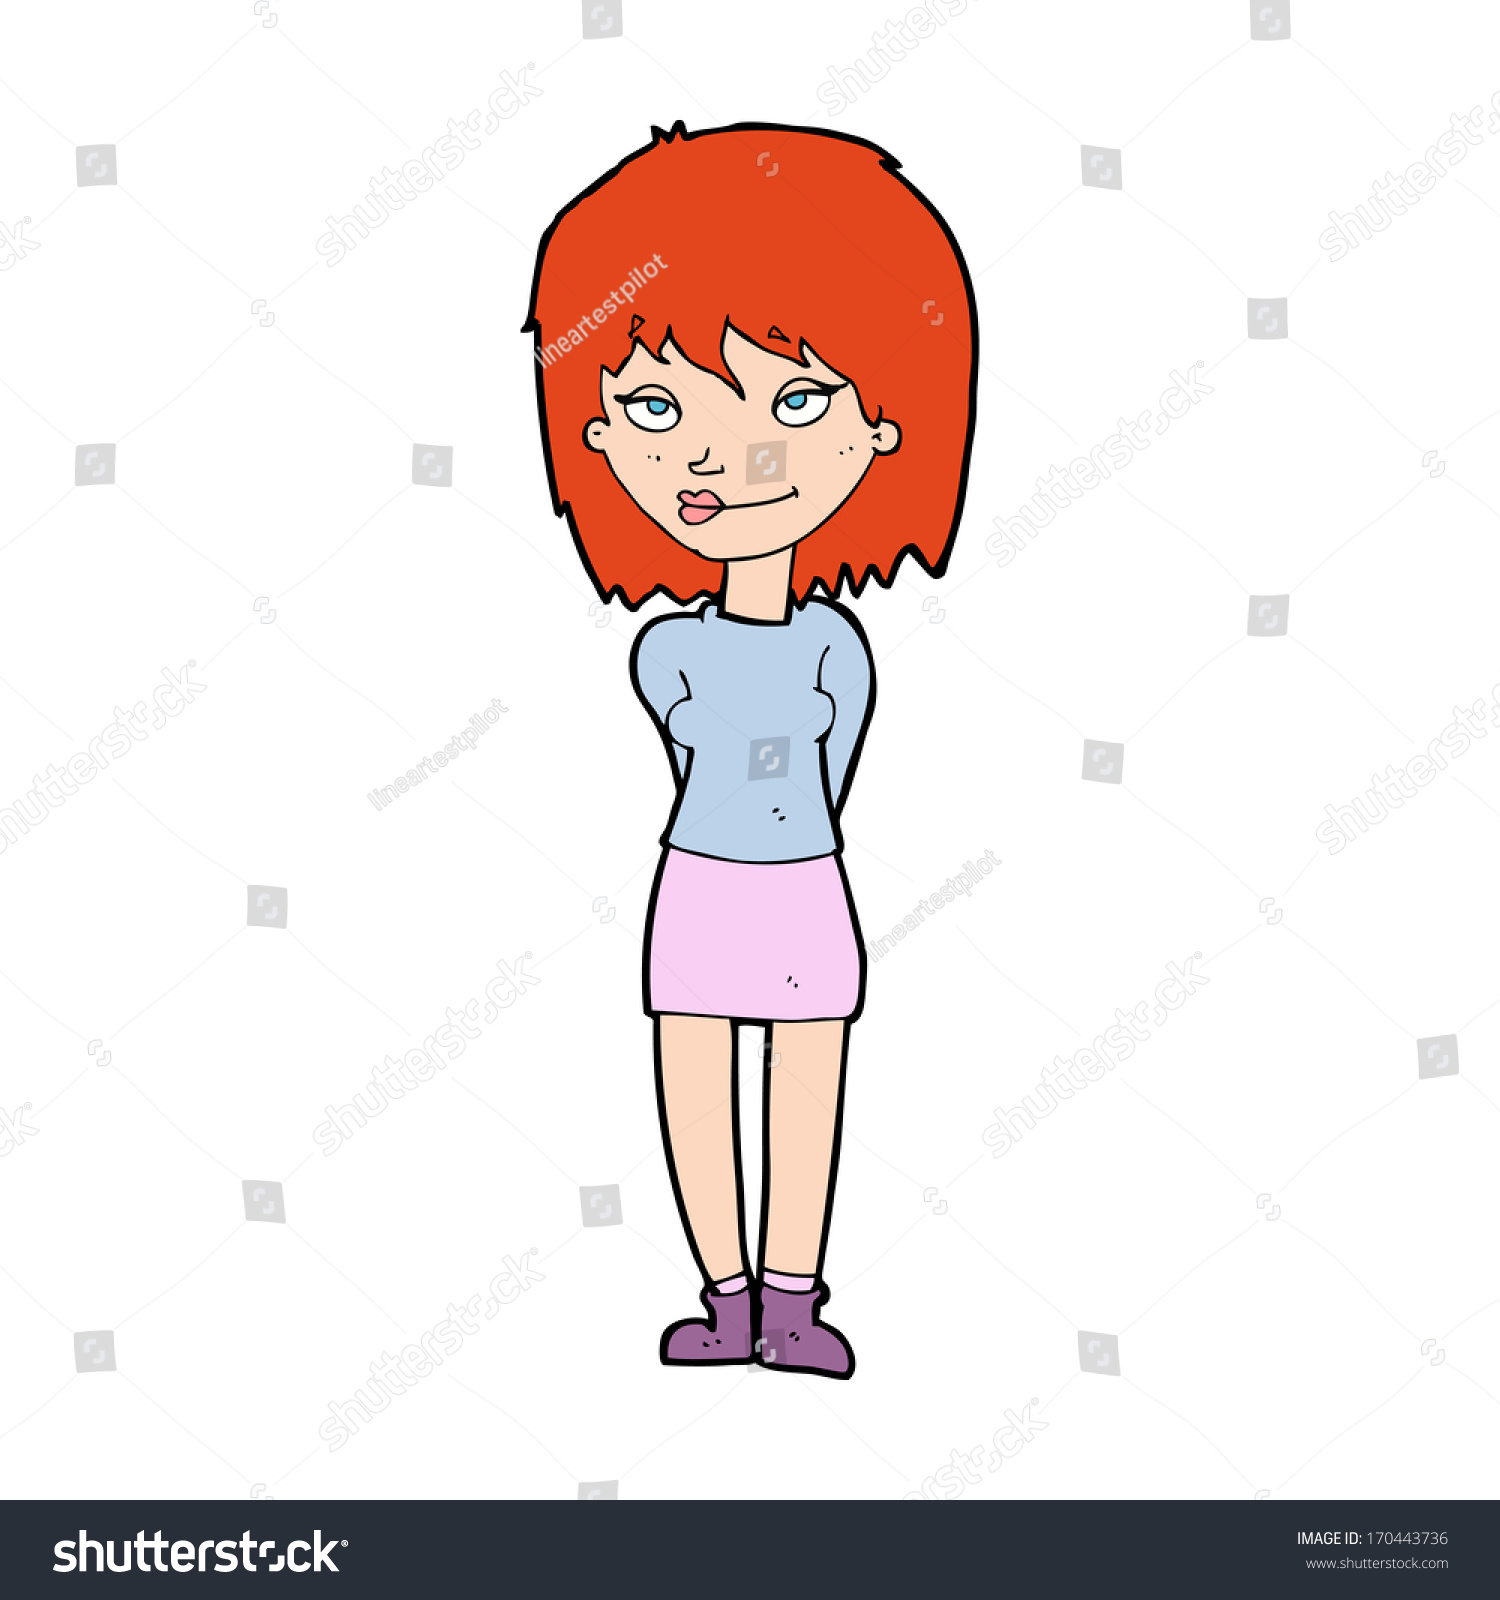 Cartoon Happy Woman Stock Photo 170443736 : Shutterstock